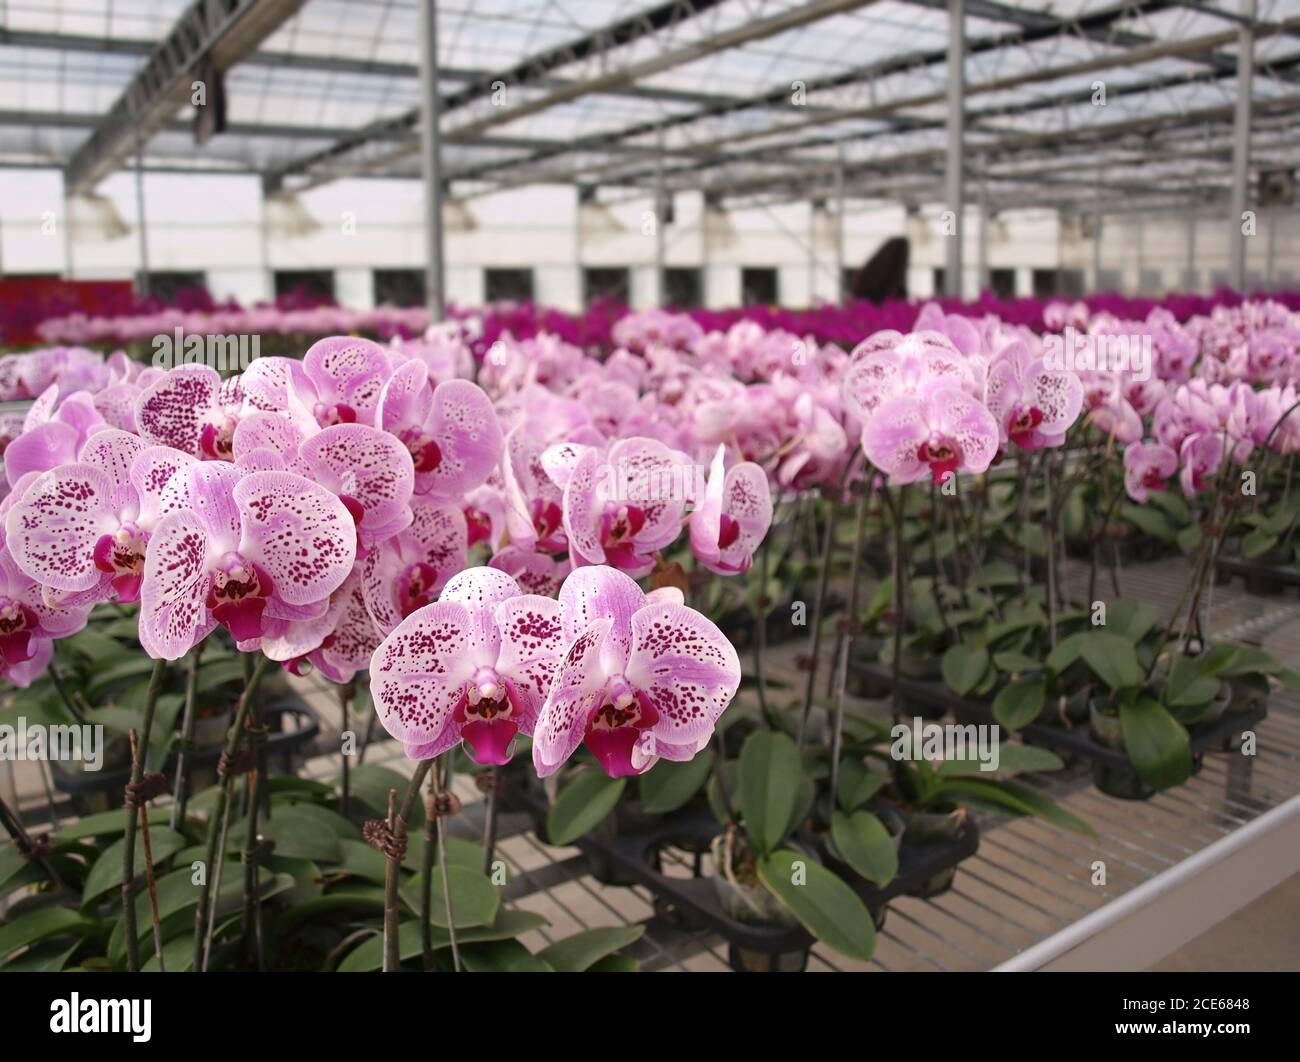 2.300+ Orquídeas Artificiales Fotografías de stock, fotos e